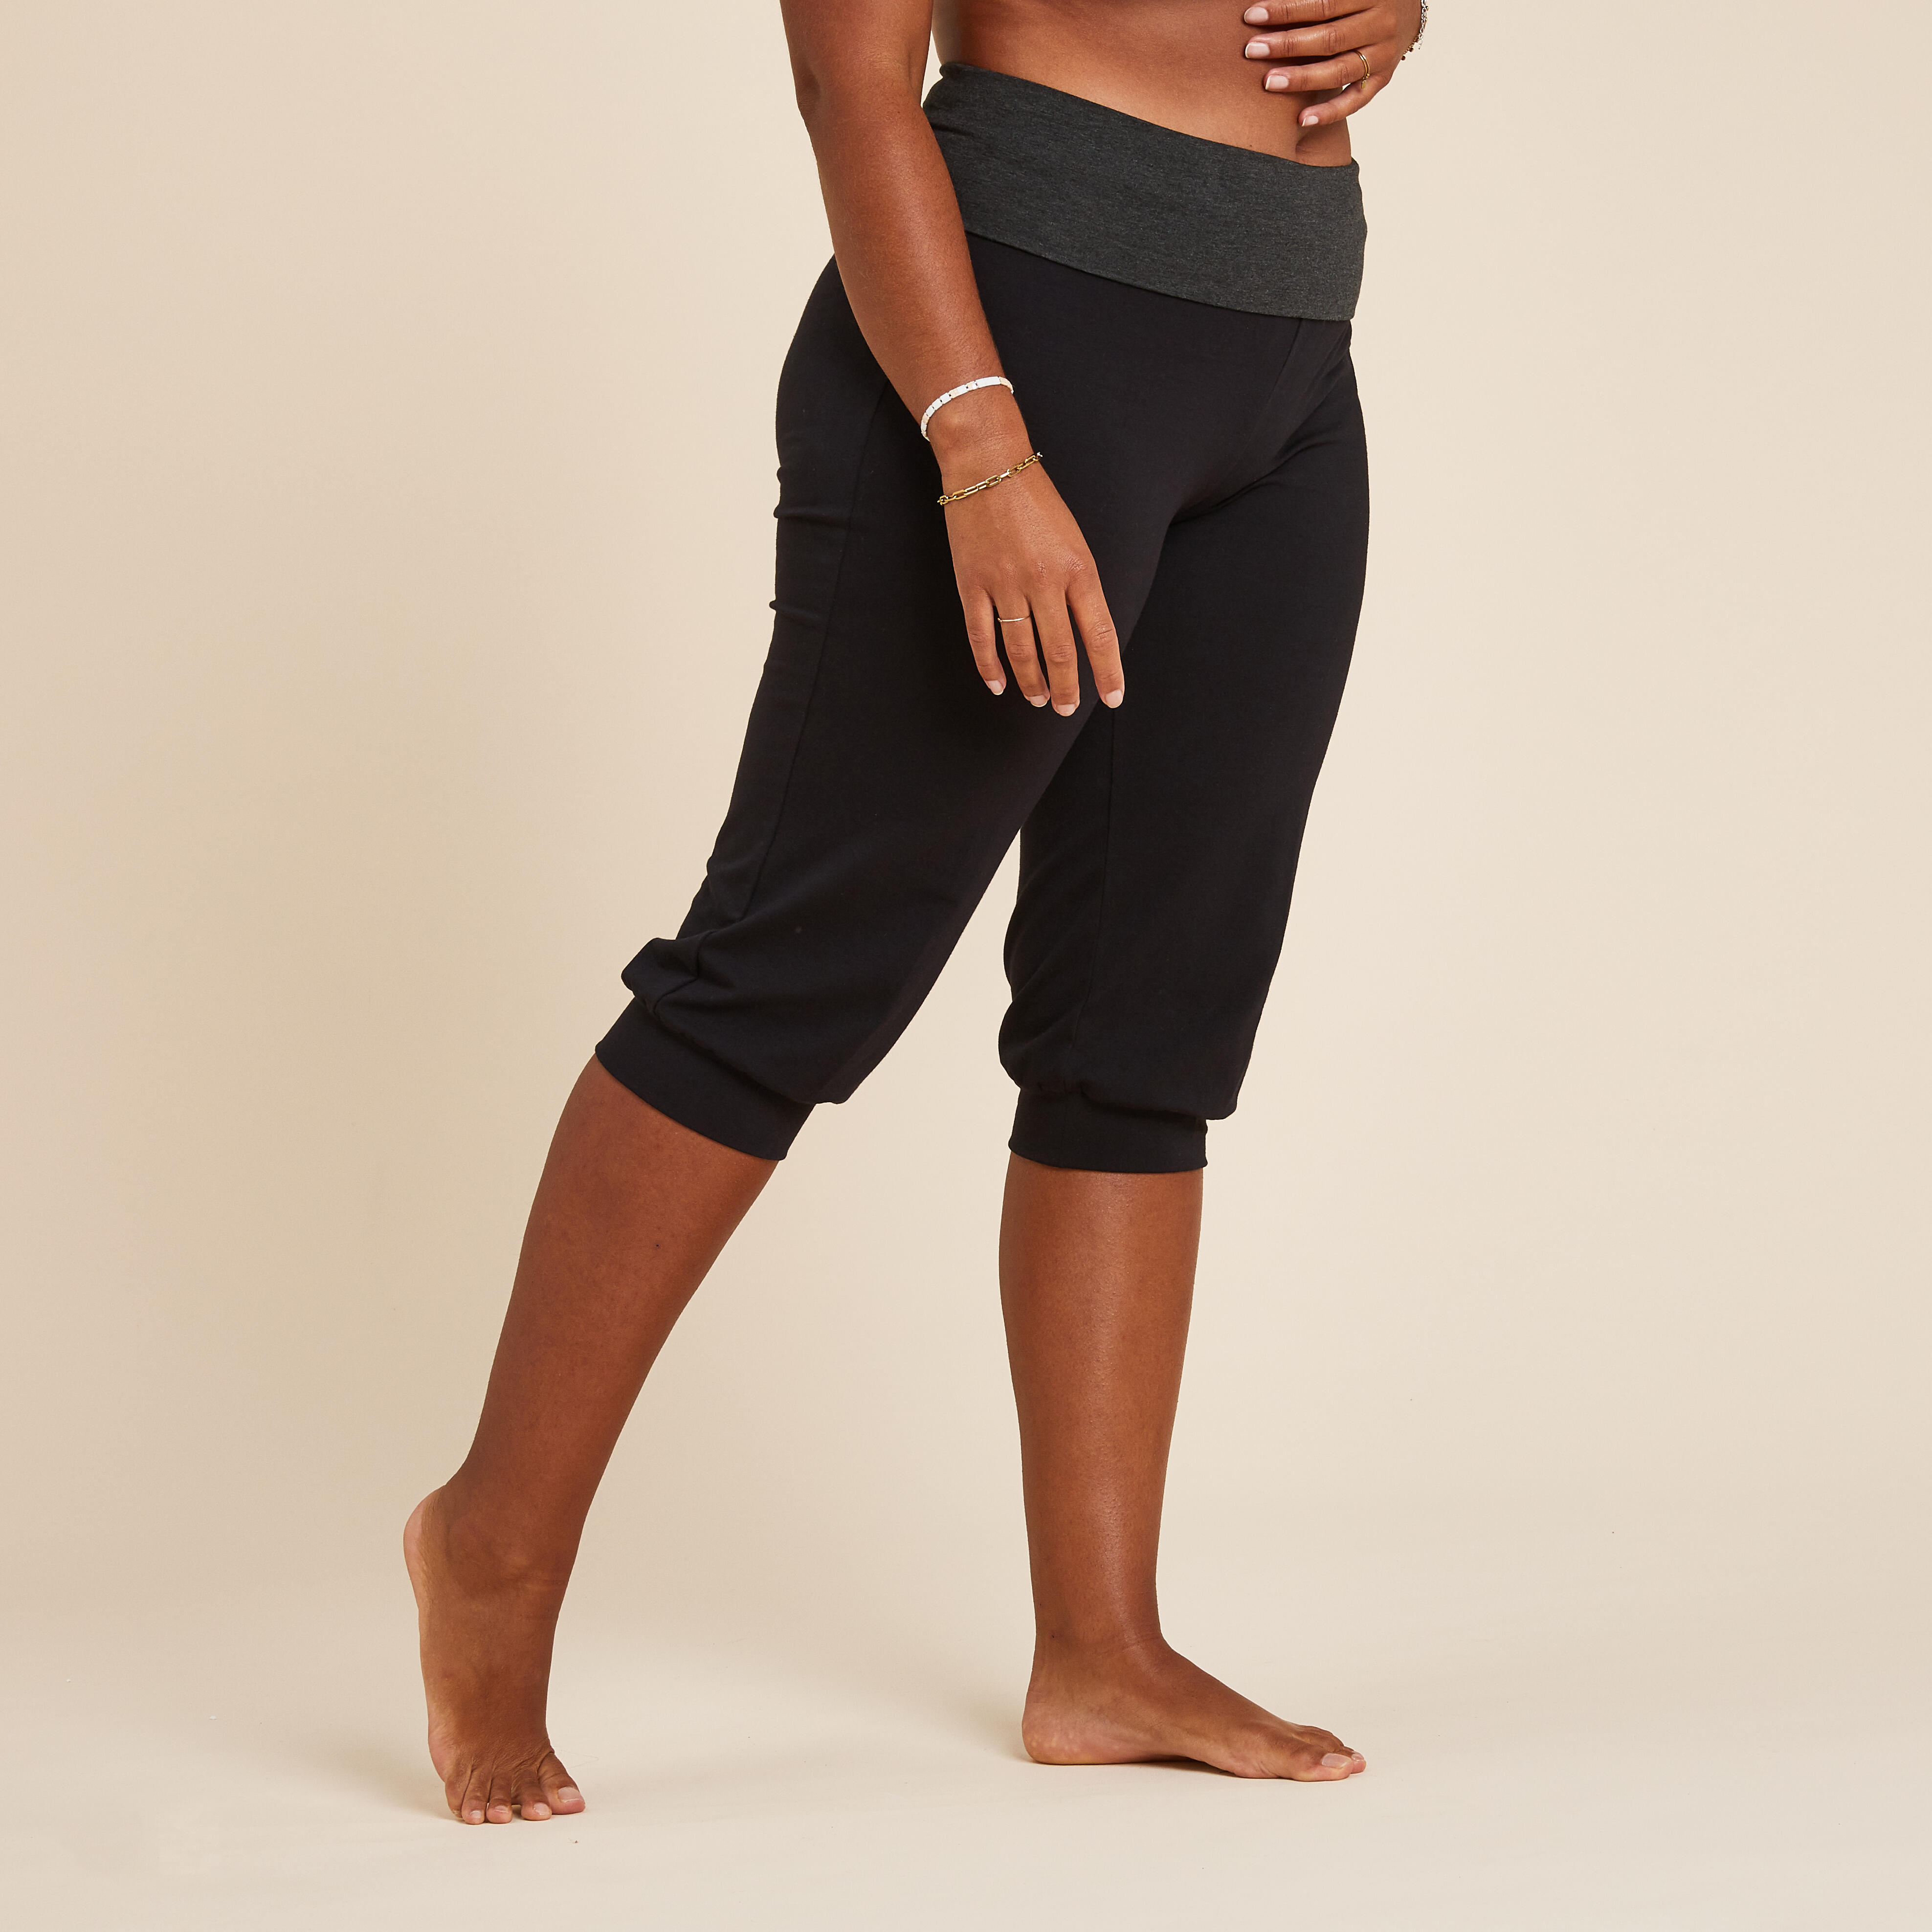 Women’s Yoga Cropped Bottoms - Black/Grey - KIMJALY